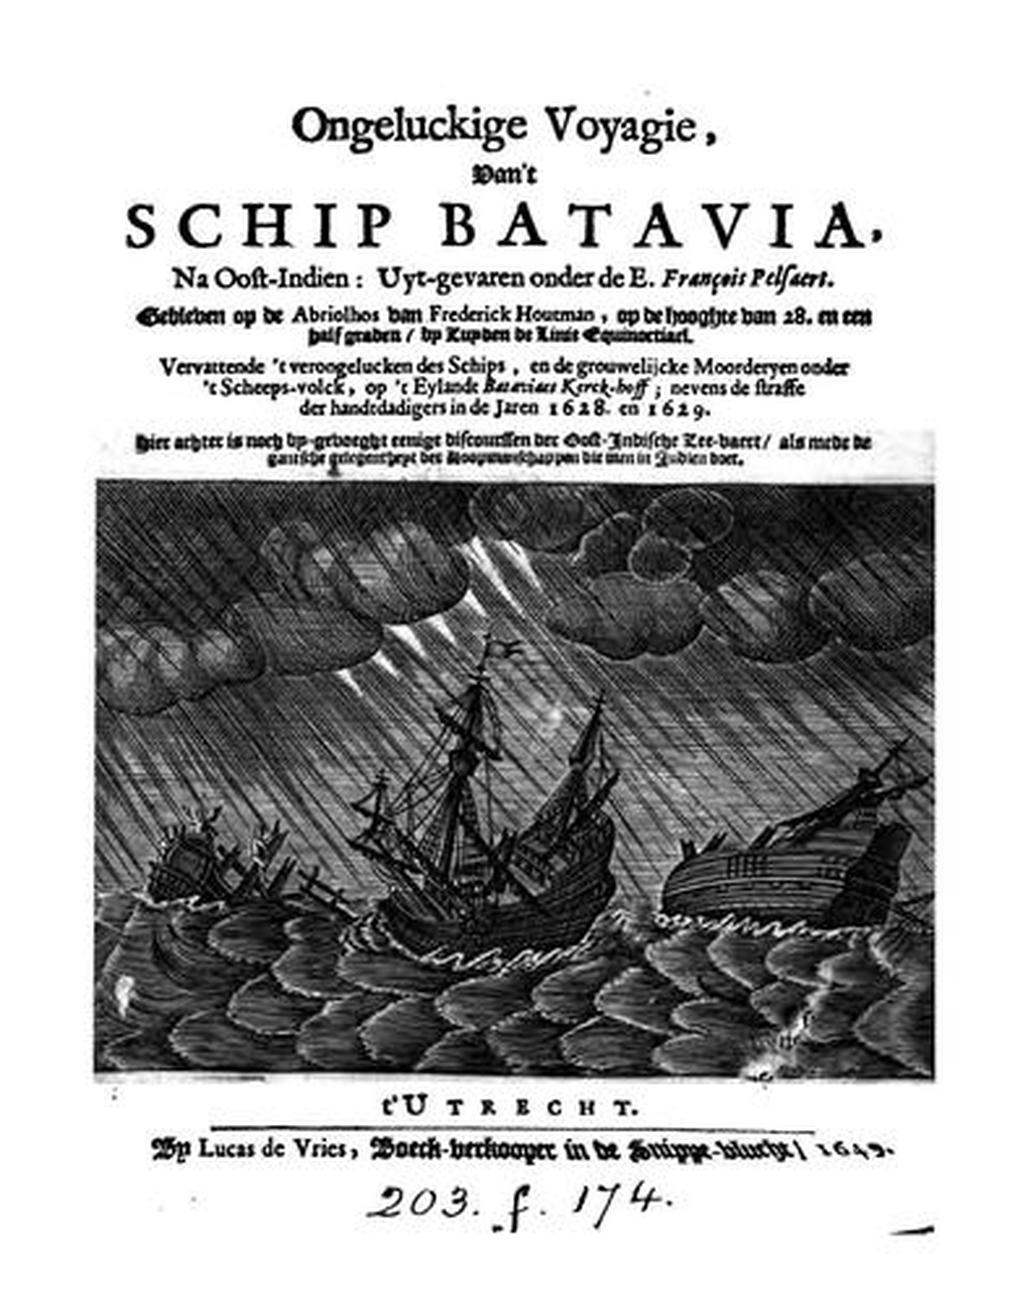 Le BATAVIA, reconstitution d'un navire de la V.O.C. (1629) 17072802263023134915175989